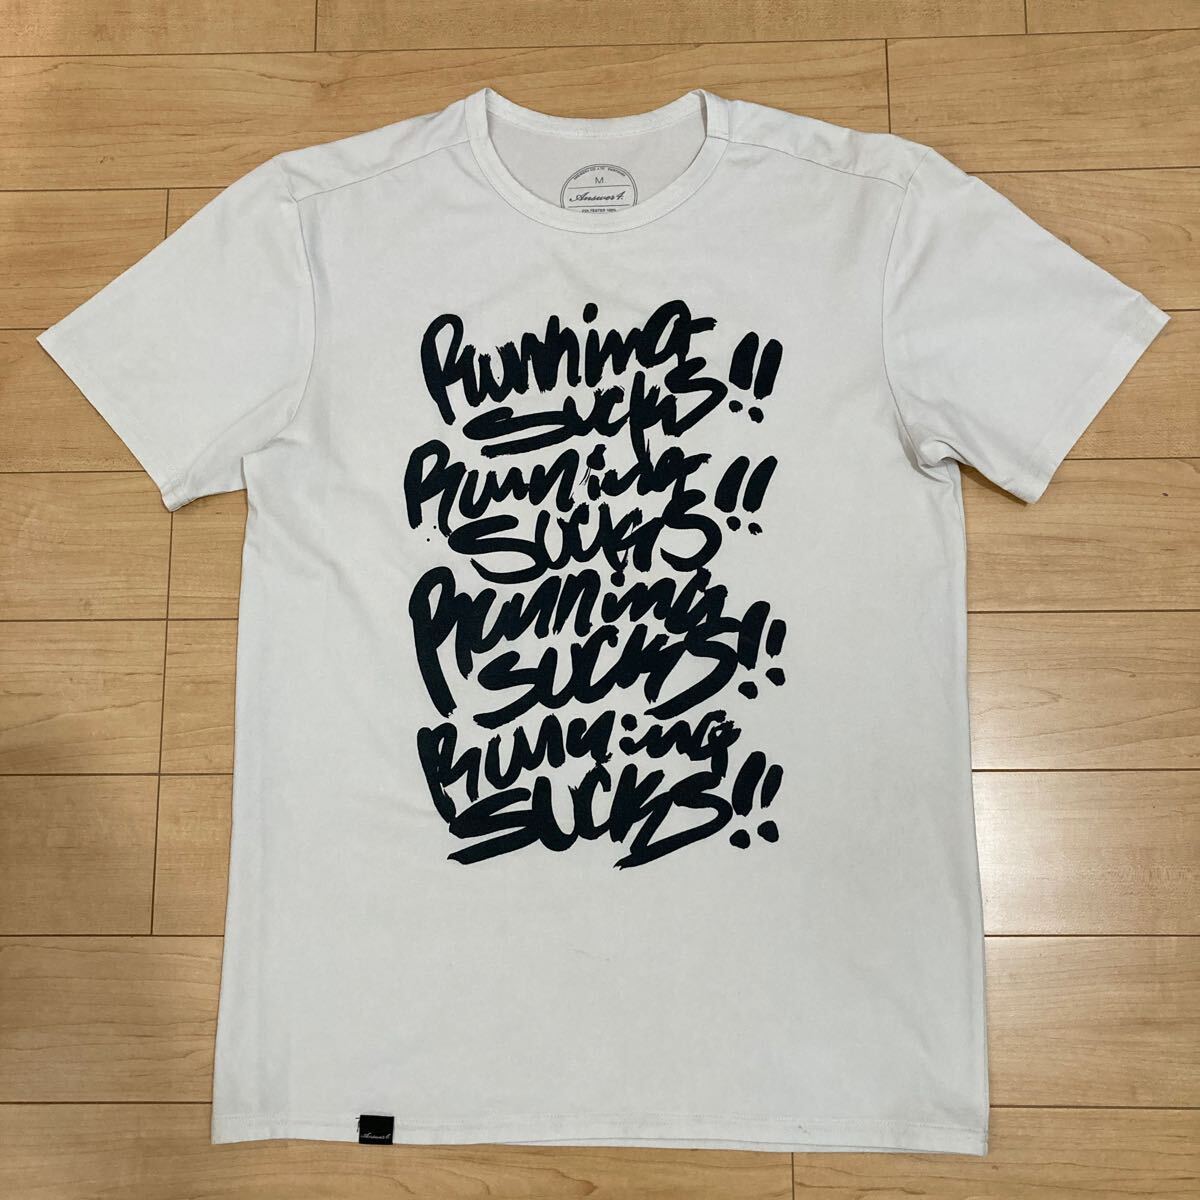 ANSER4 T-shirt running sucks! m size アンサー4 ティーシャツ ランニング サックス! m サイズ_画像1